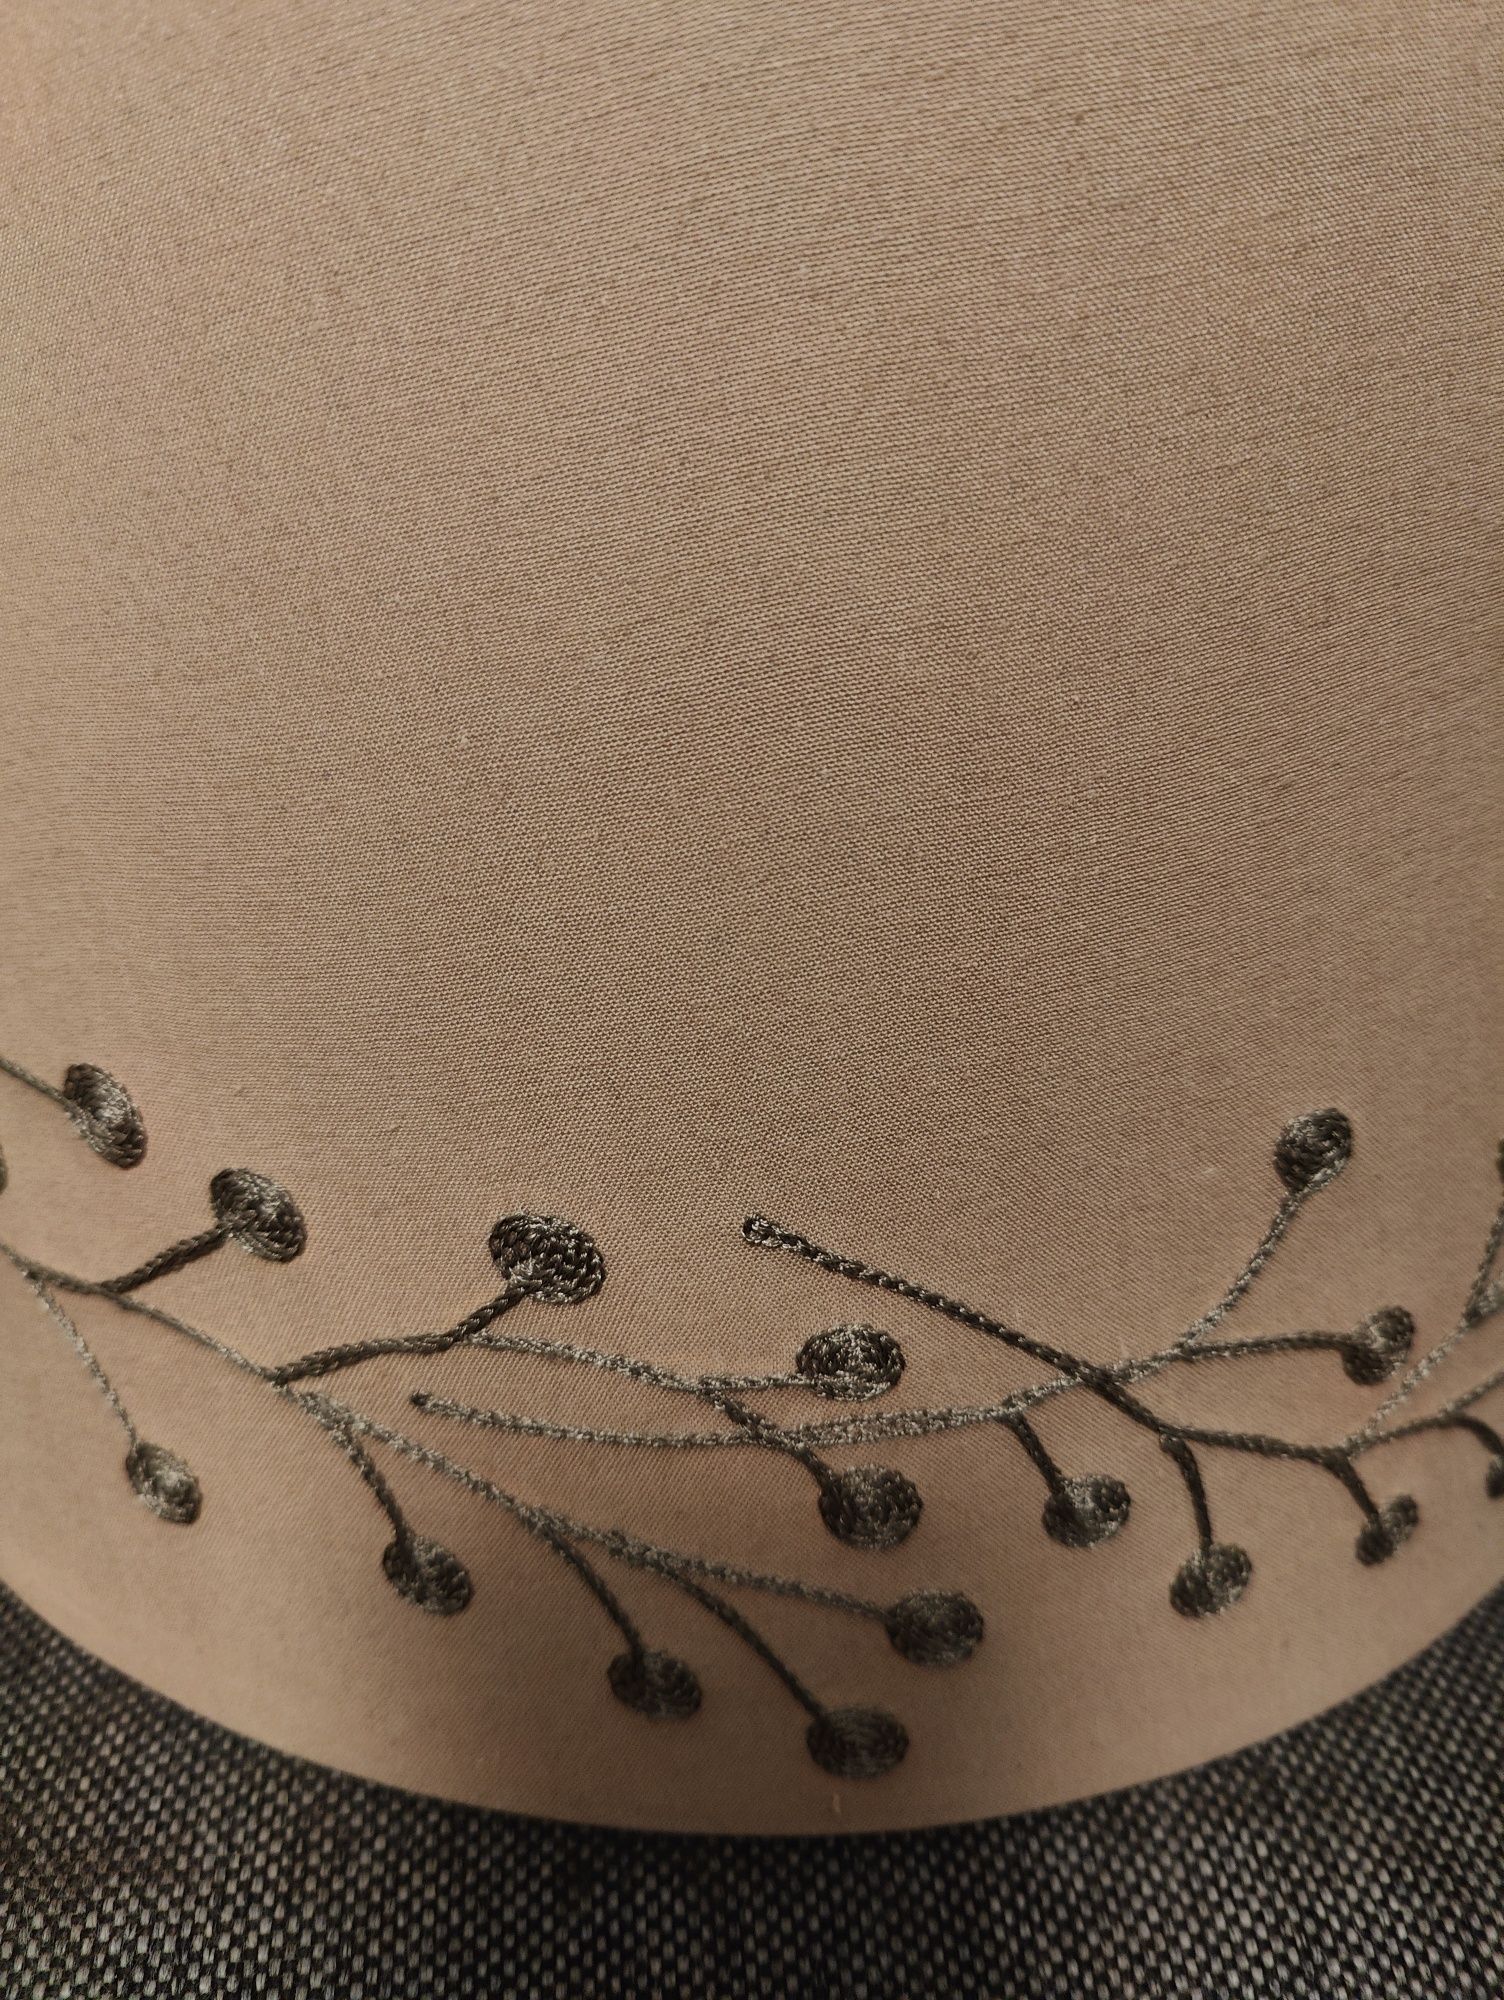 Abażur ikea duży 34 cm haft klosz wysyłka